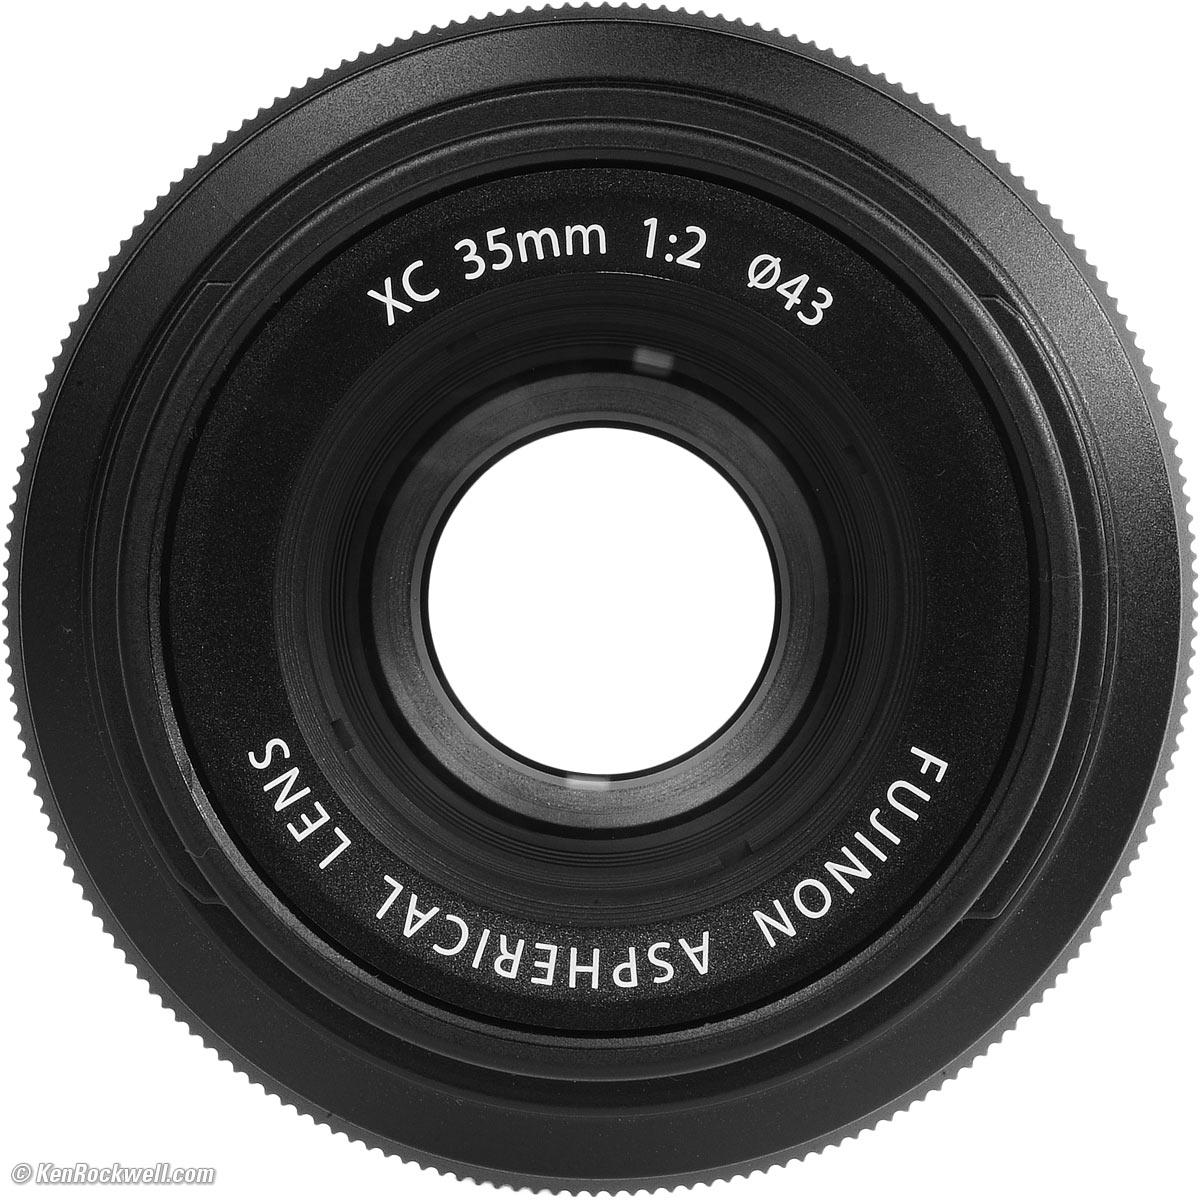 Fuji XC 35mm f/2 Review